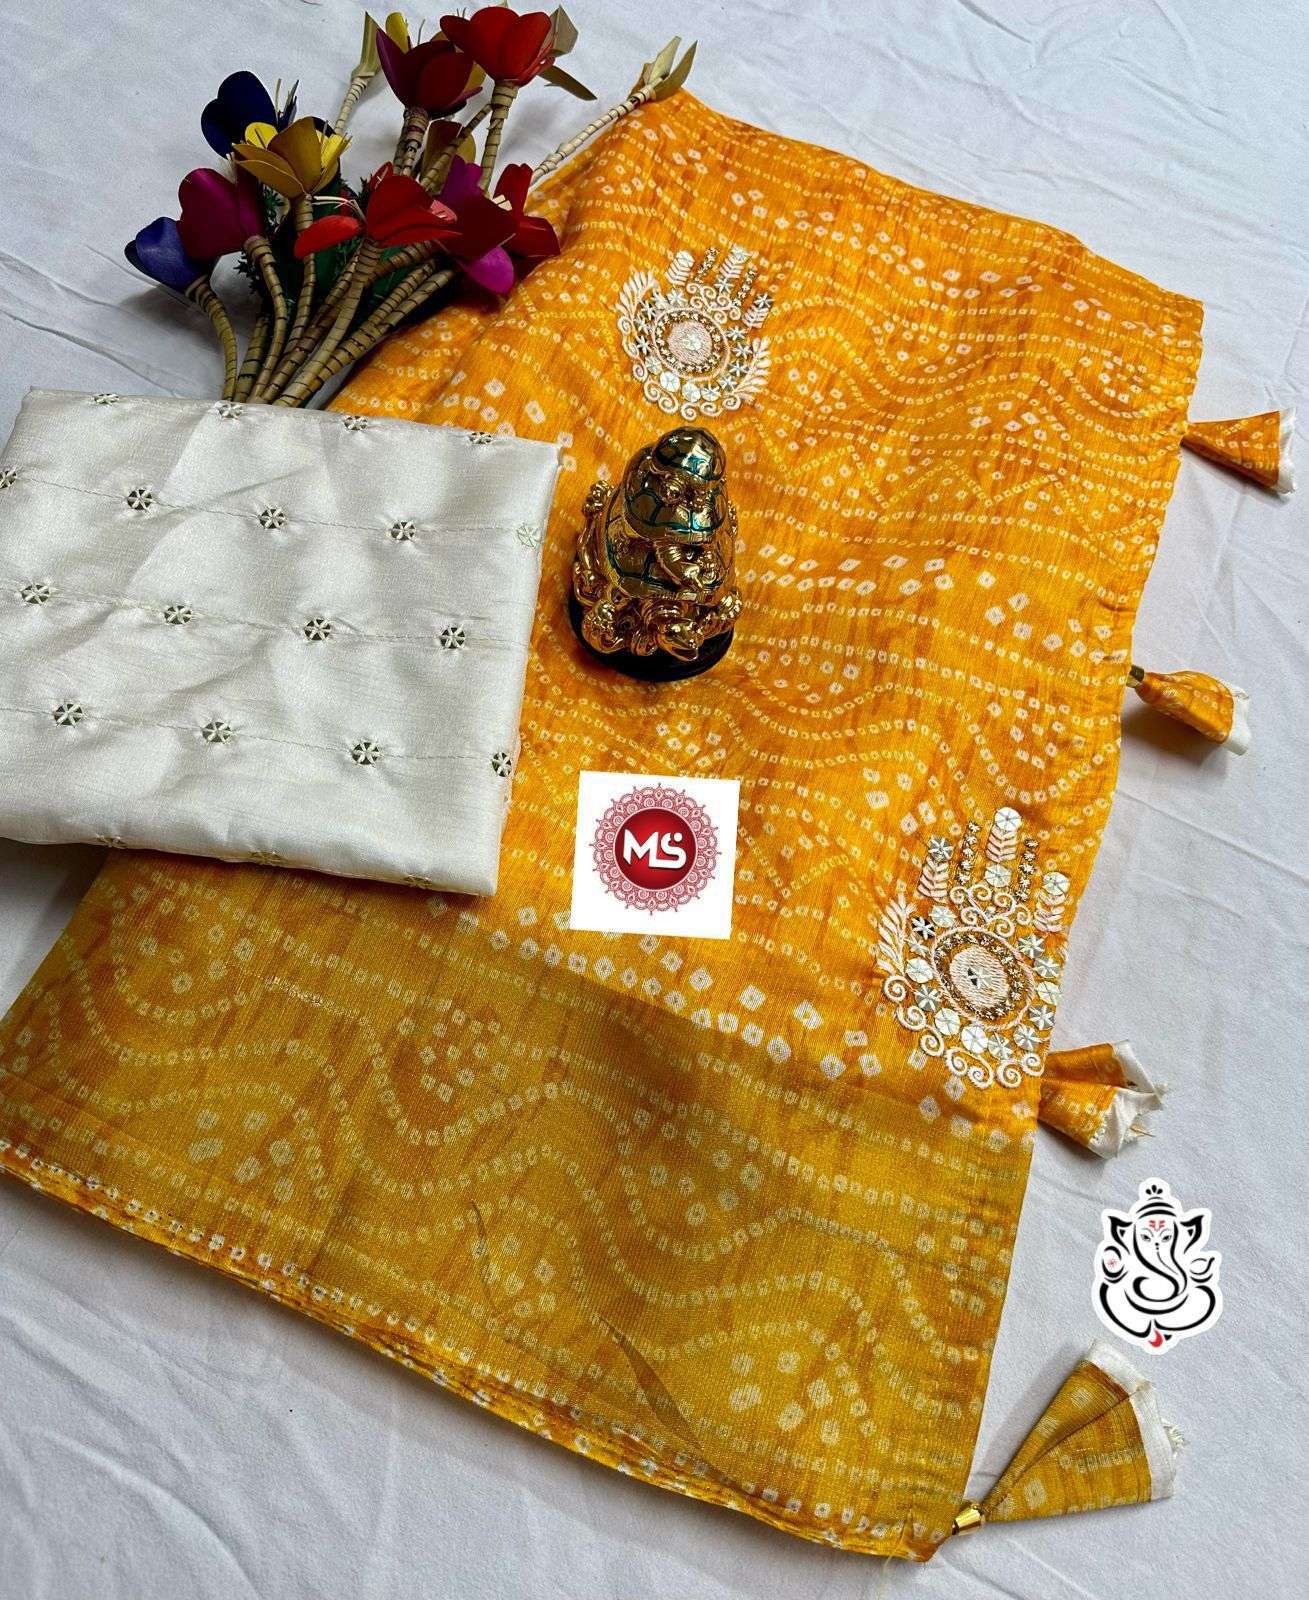 MS BRAND bandhni Crystal fabric cotton saree in 9mm butta